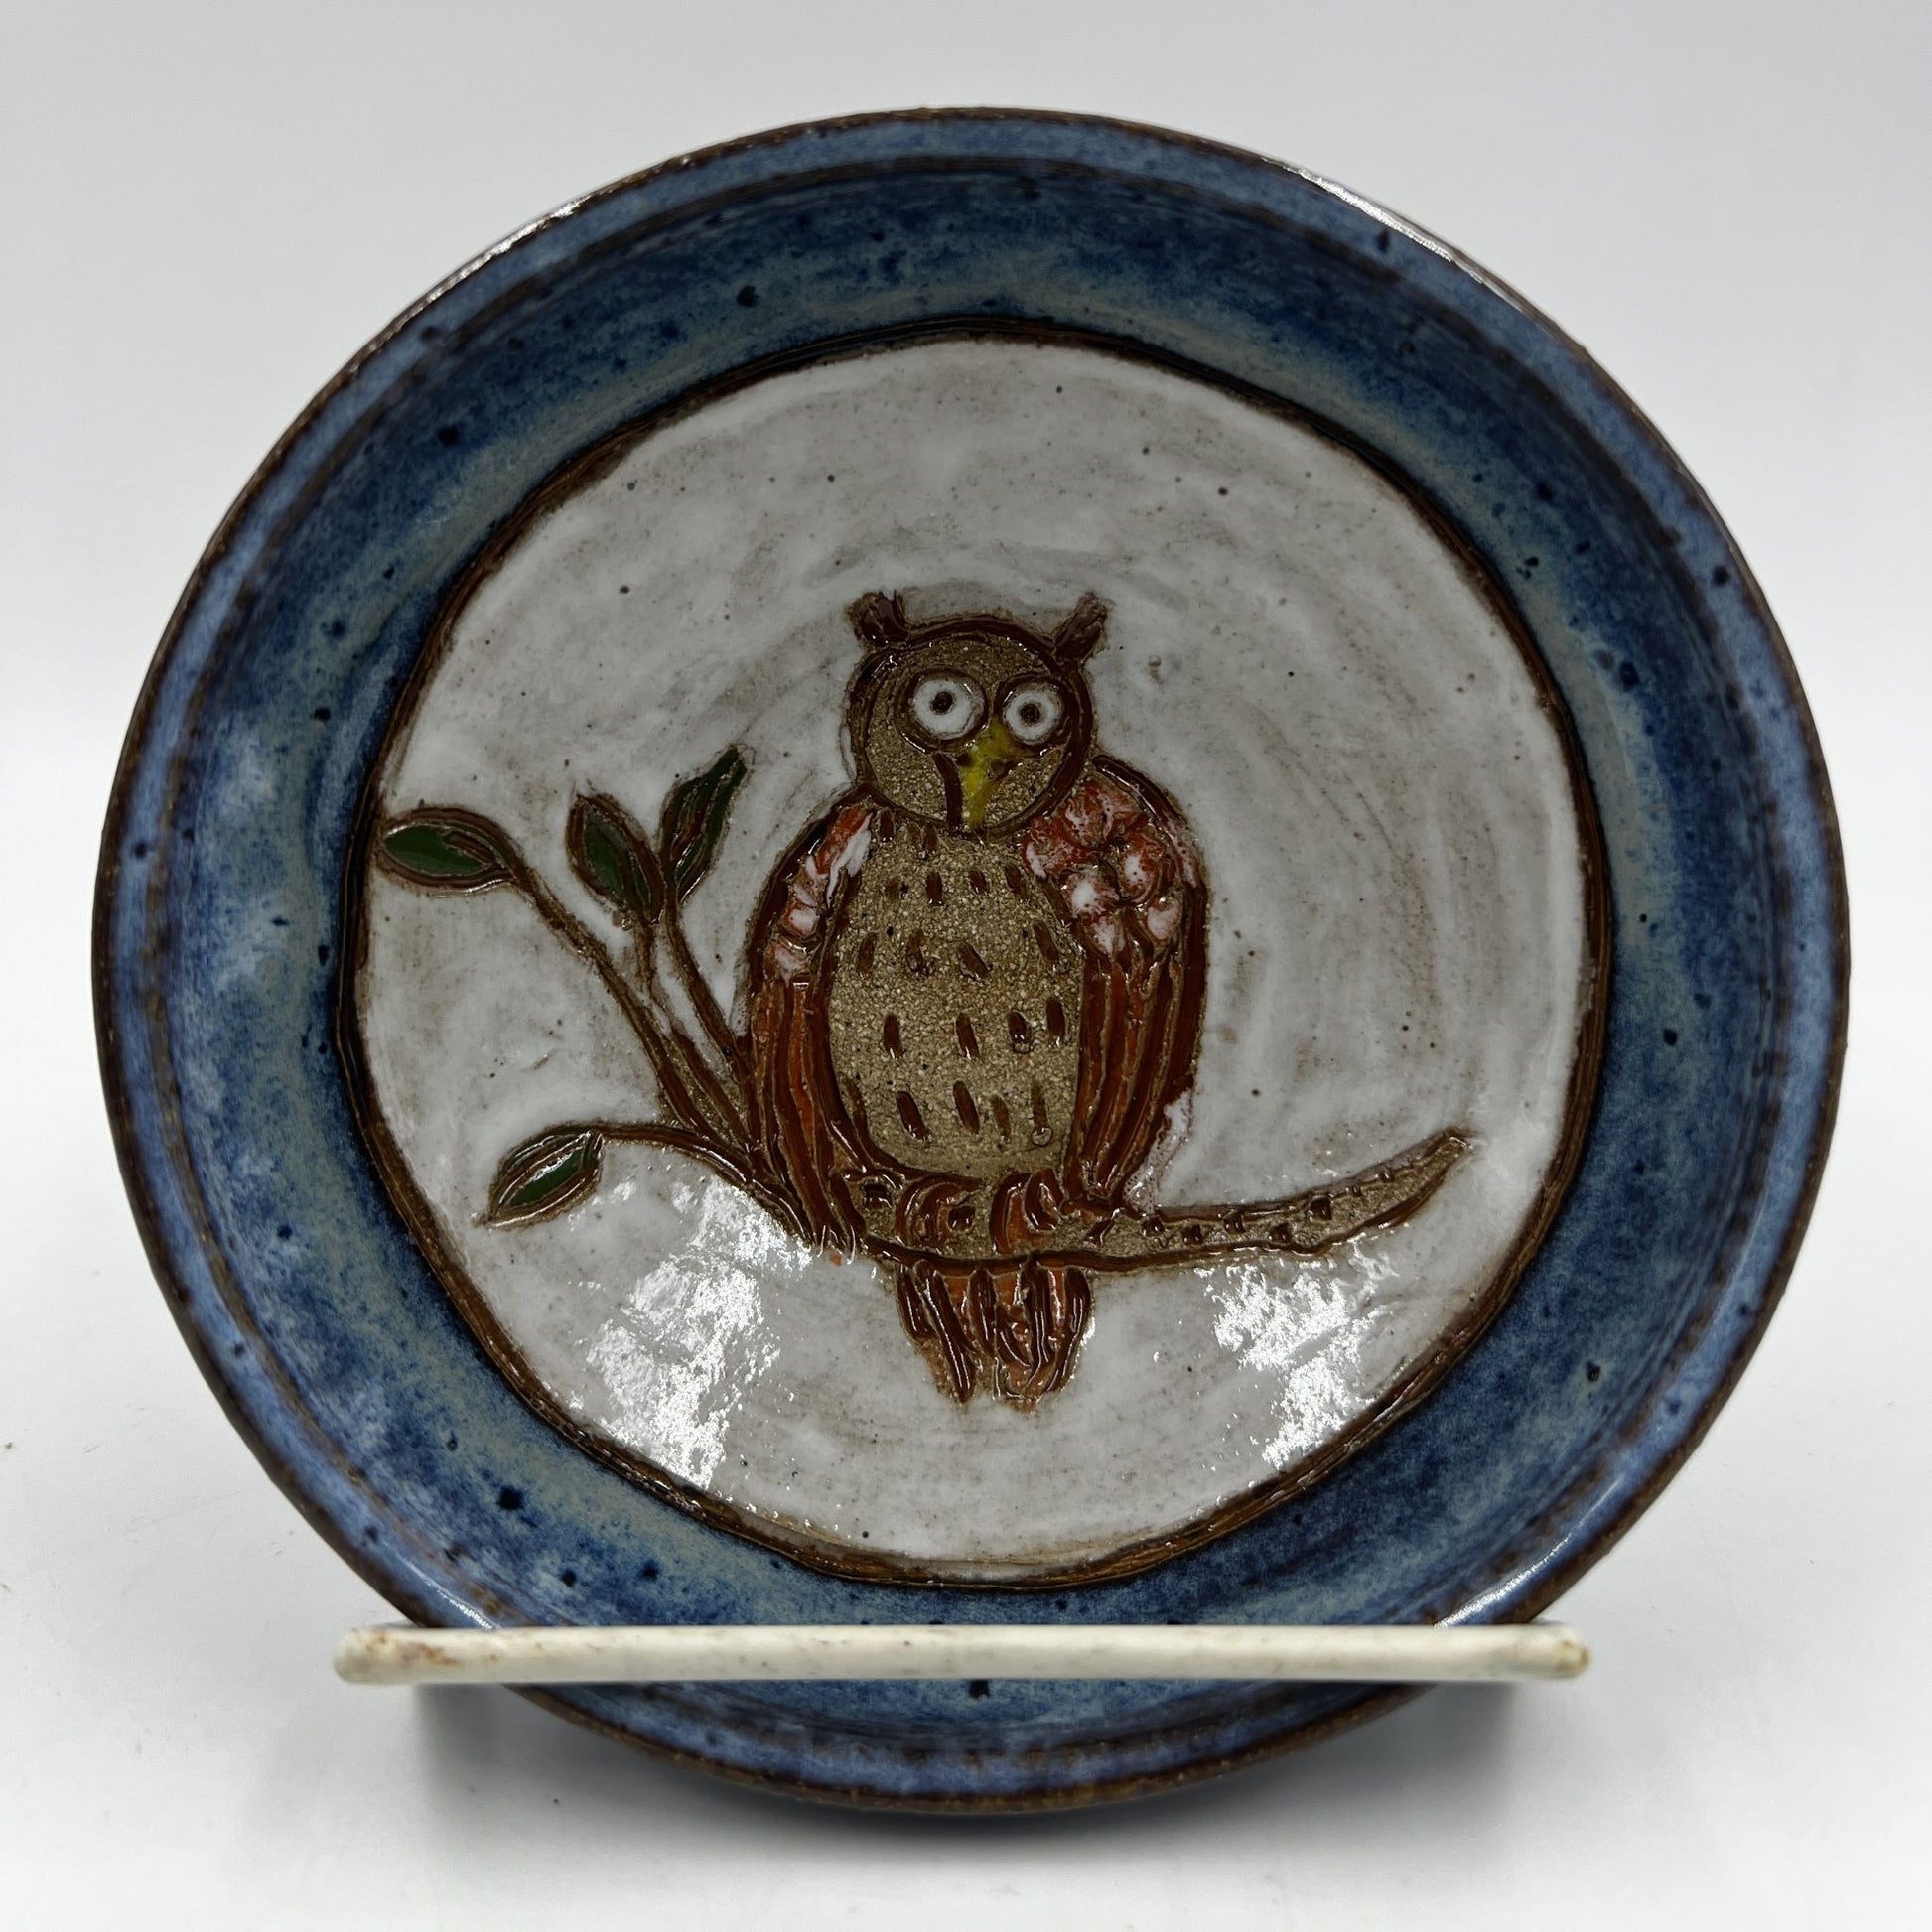 Details of SAS Owl Hand Painted Stoneware Bowl